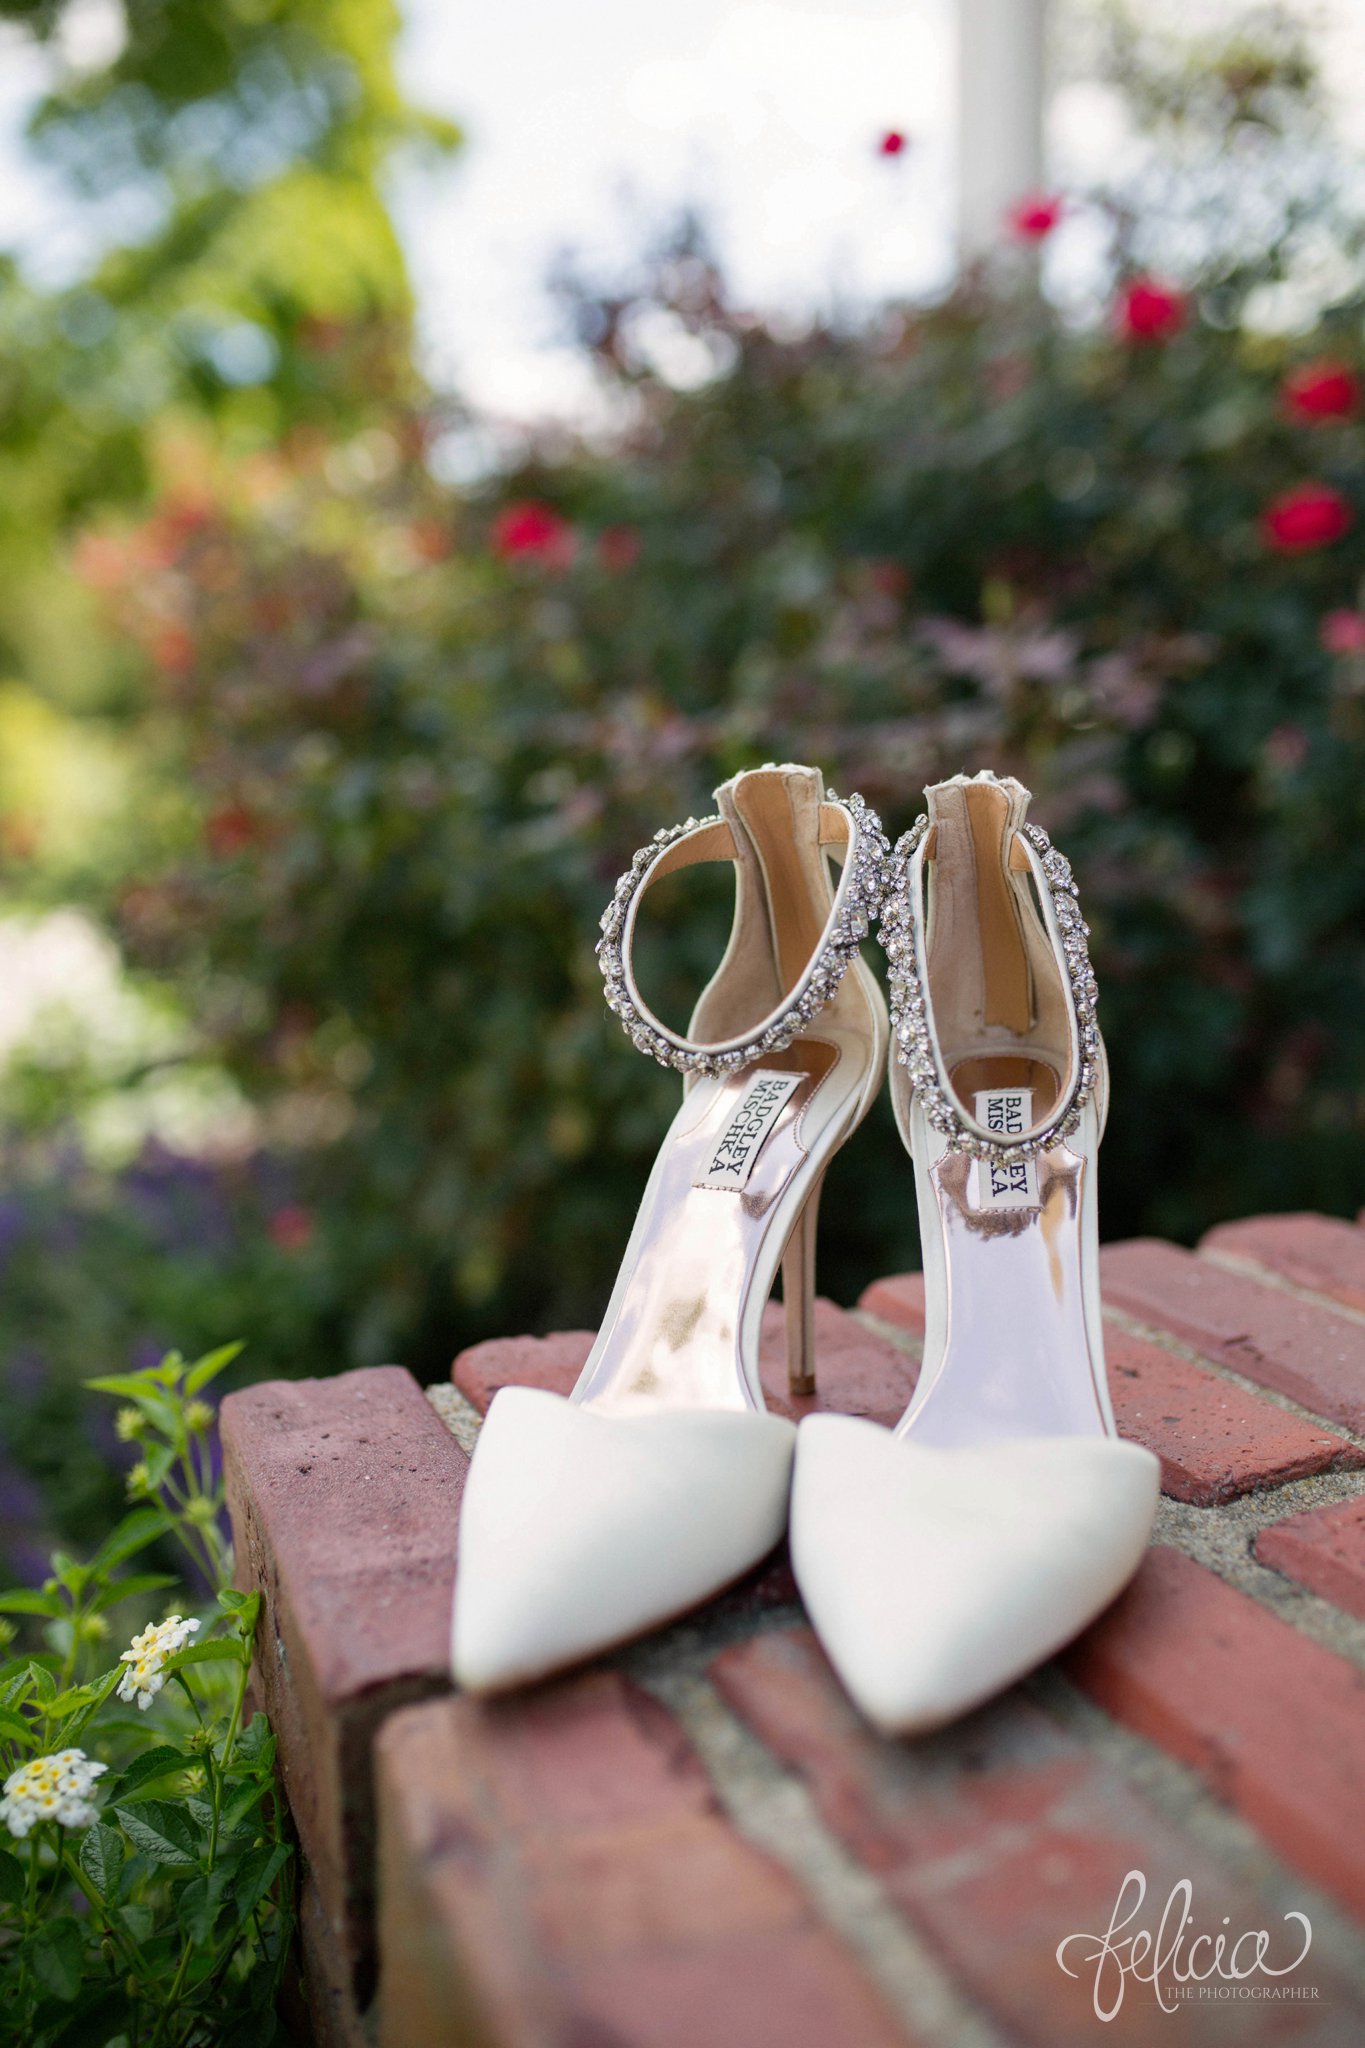 Wedding Shoes | Badgley Mischka | Pointy | Rhinestone | Ankle Strap | Flash Heel | Kansas City | Felicia The Photographer